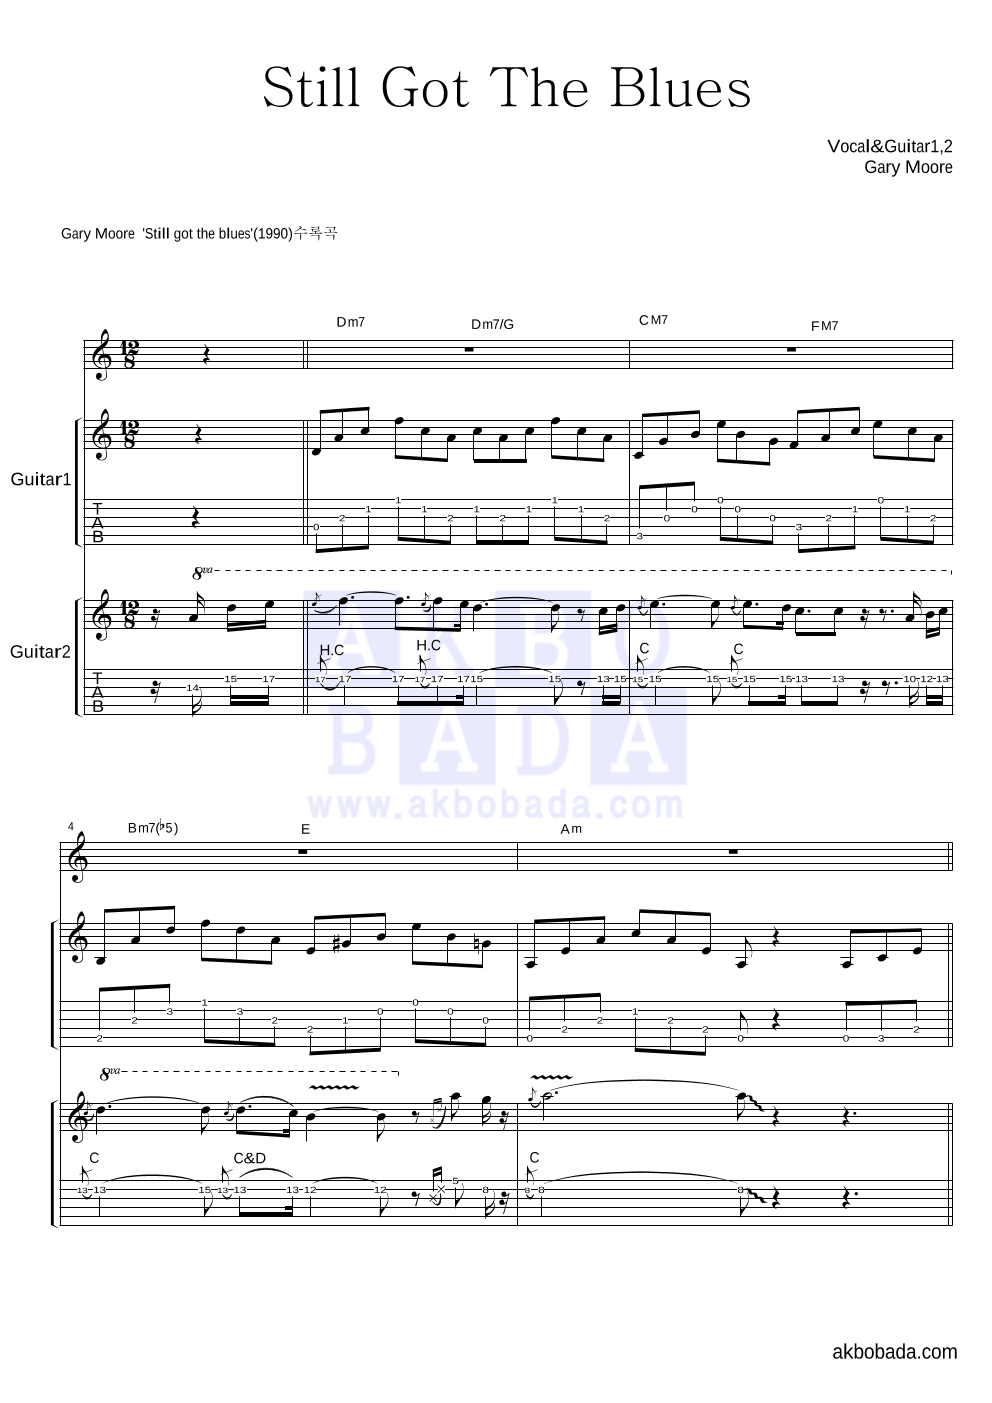 Gary Moore - Still got the blues 기타1,2 악보 